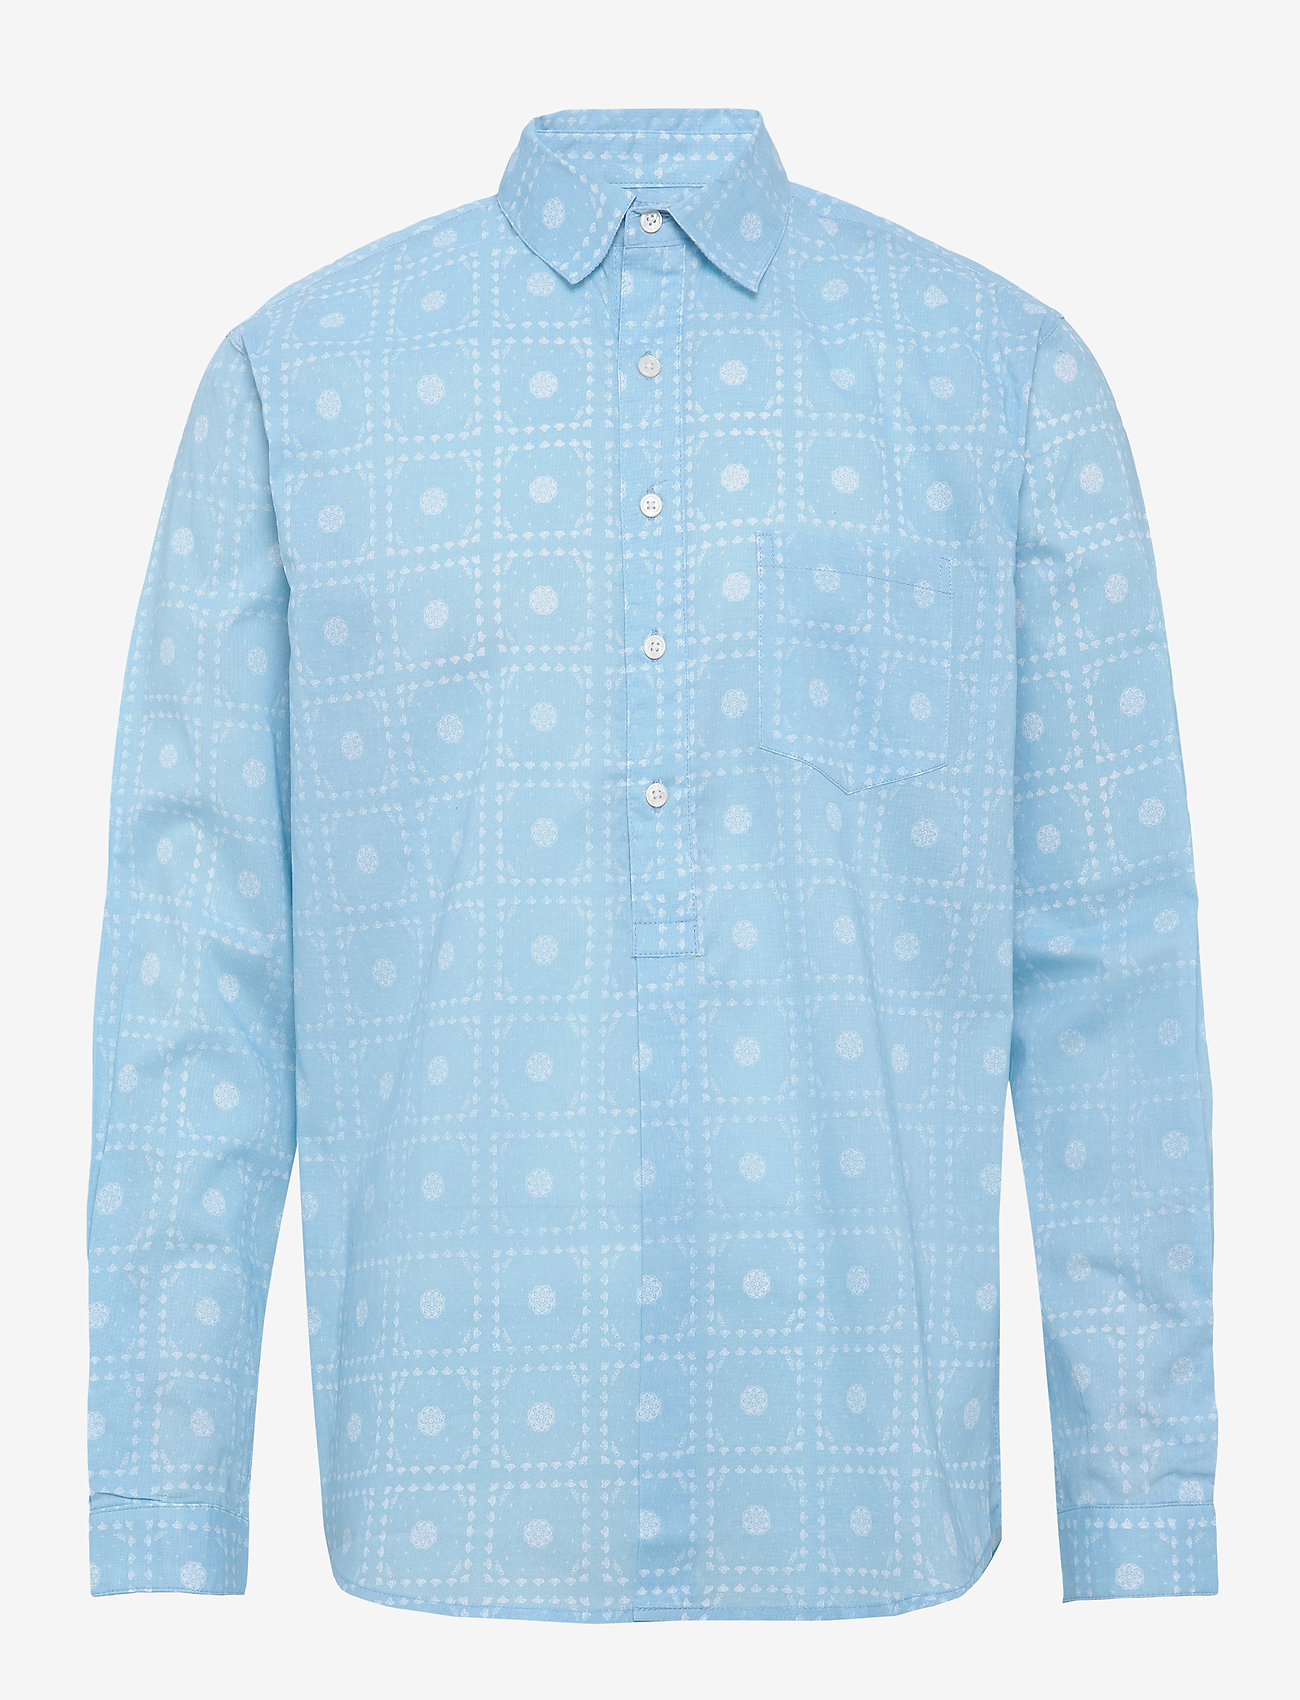 Resteröds - Pop over shirt, paisley - penskjorter - blue - 0